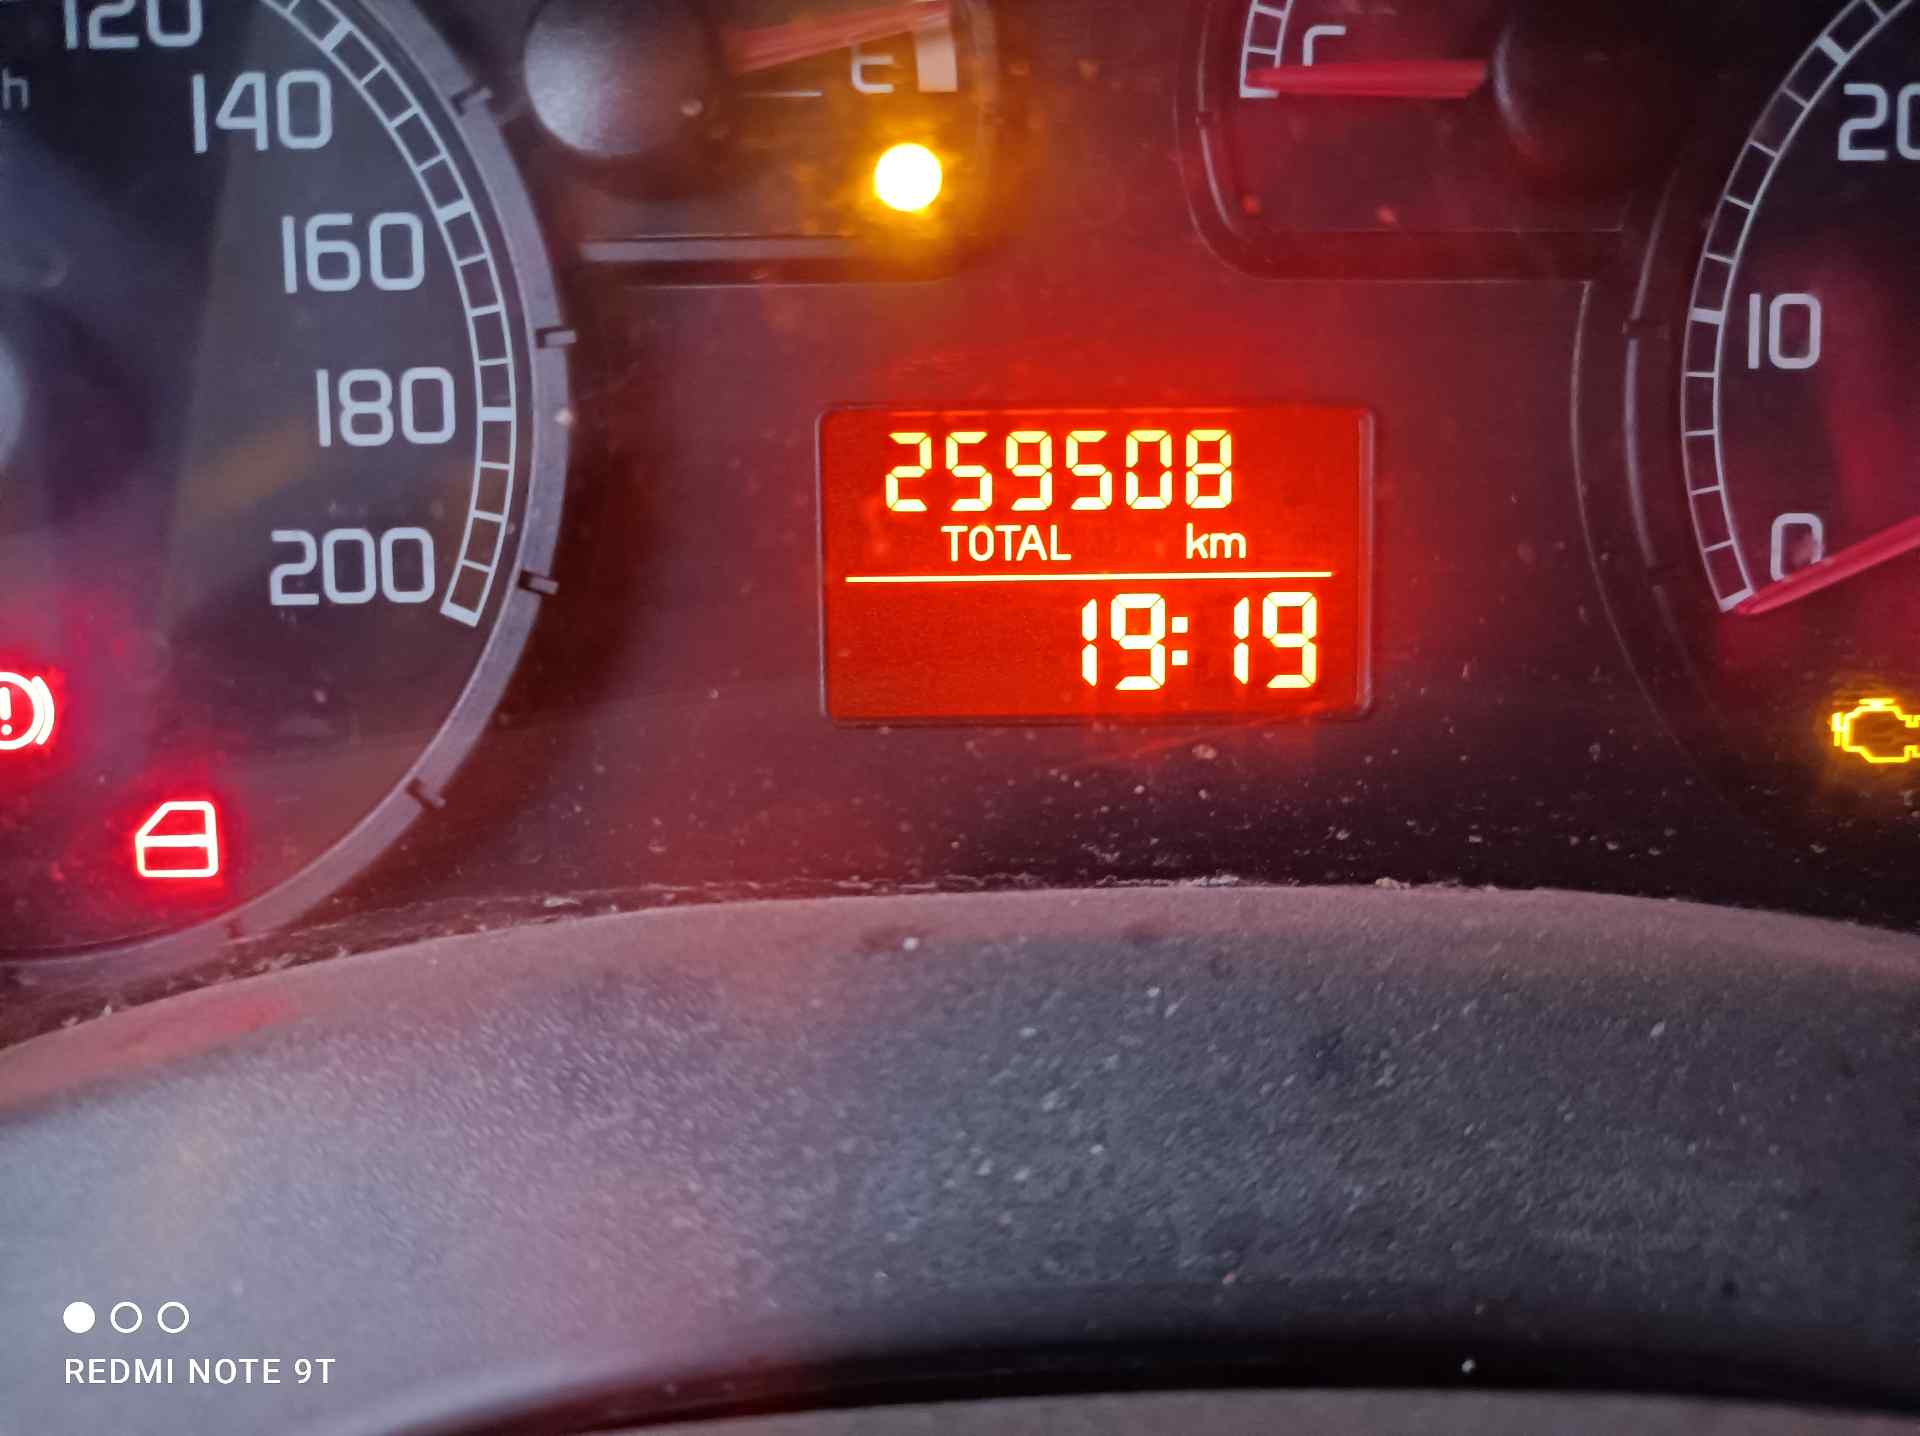 FIAT Doblo 1 generation (2001-2017) кнопка опасности 7354198620E 19191072